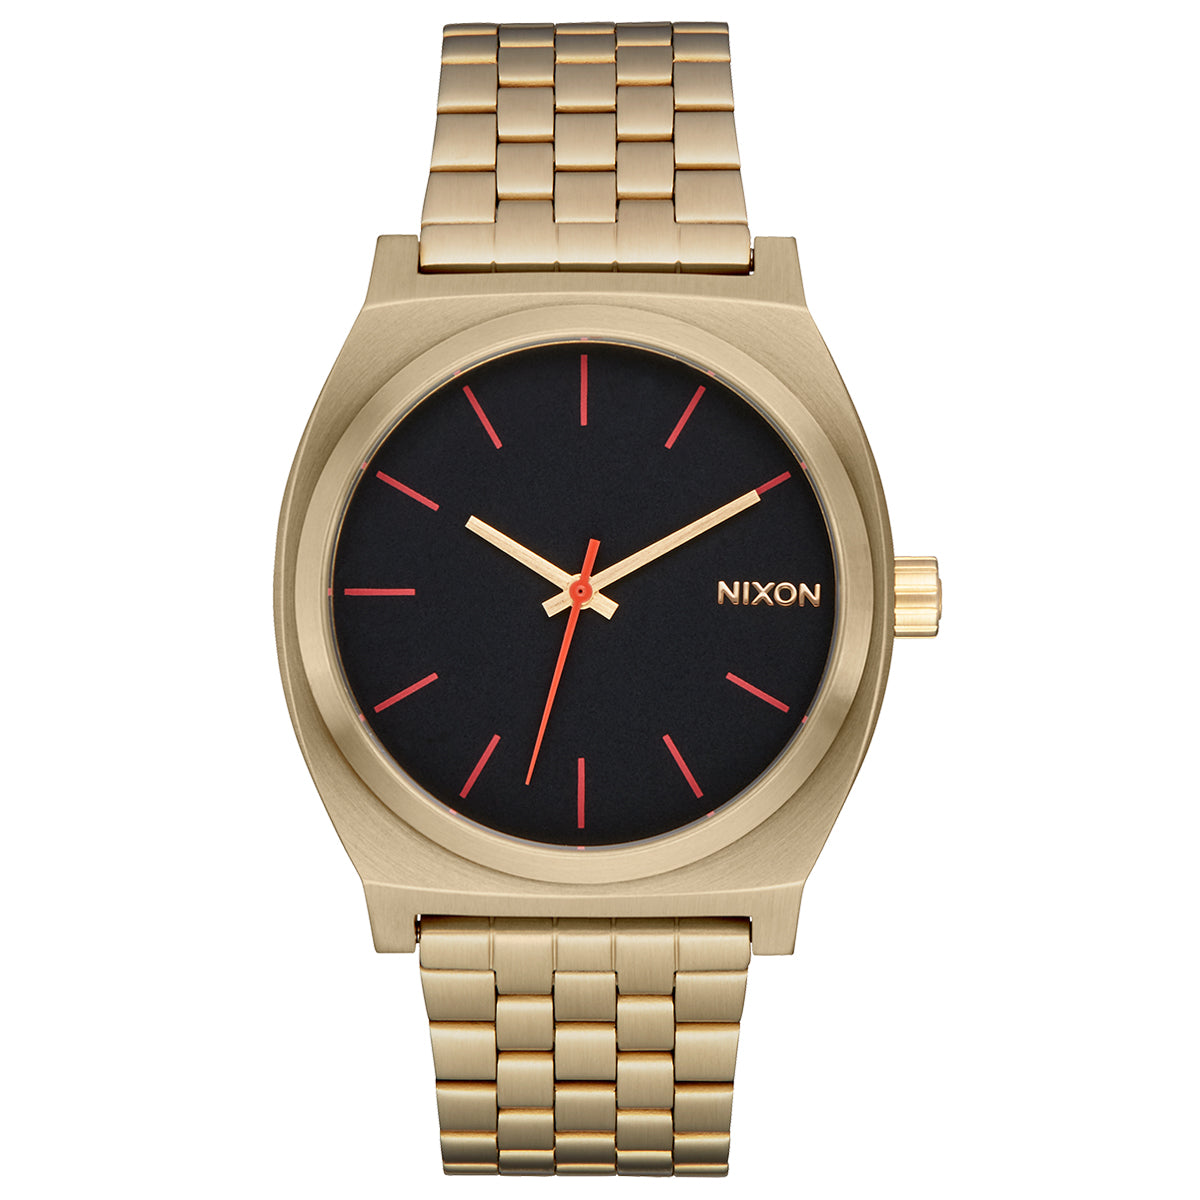 Nixon Time Teller Watch - Champagne/Black/Red image 1